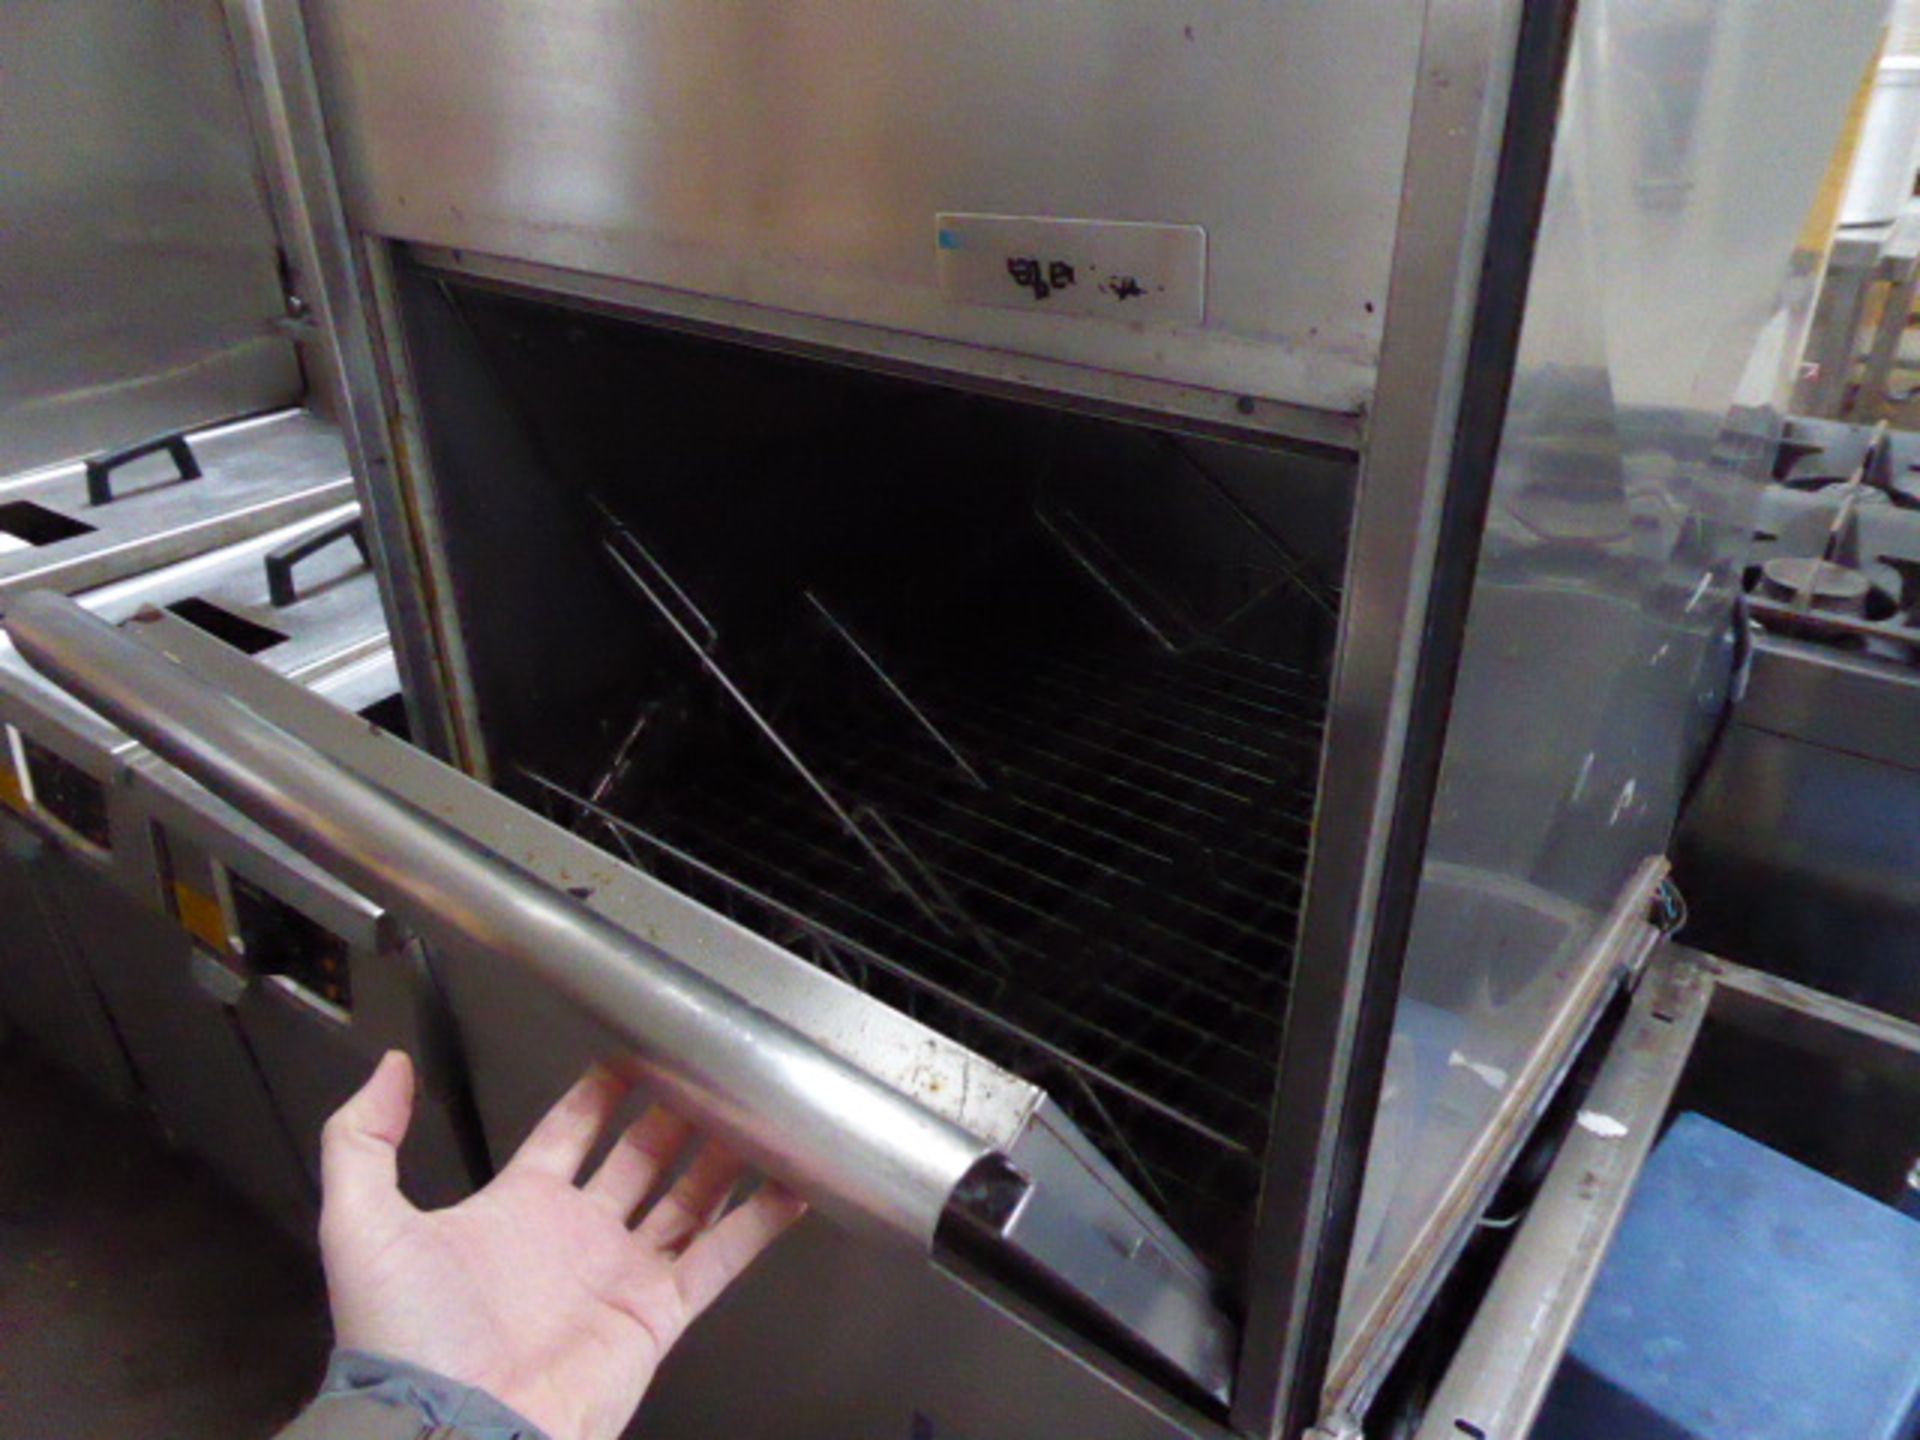 72cm Winterhalter drop front dishwasher - Image 3 of 3